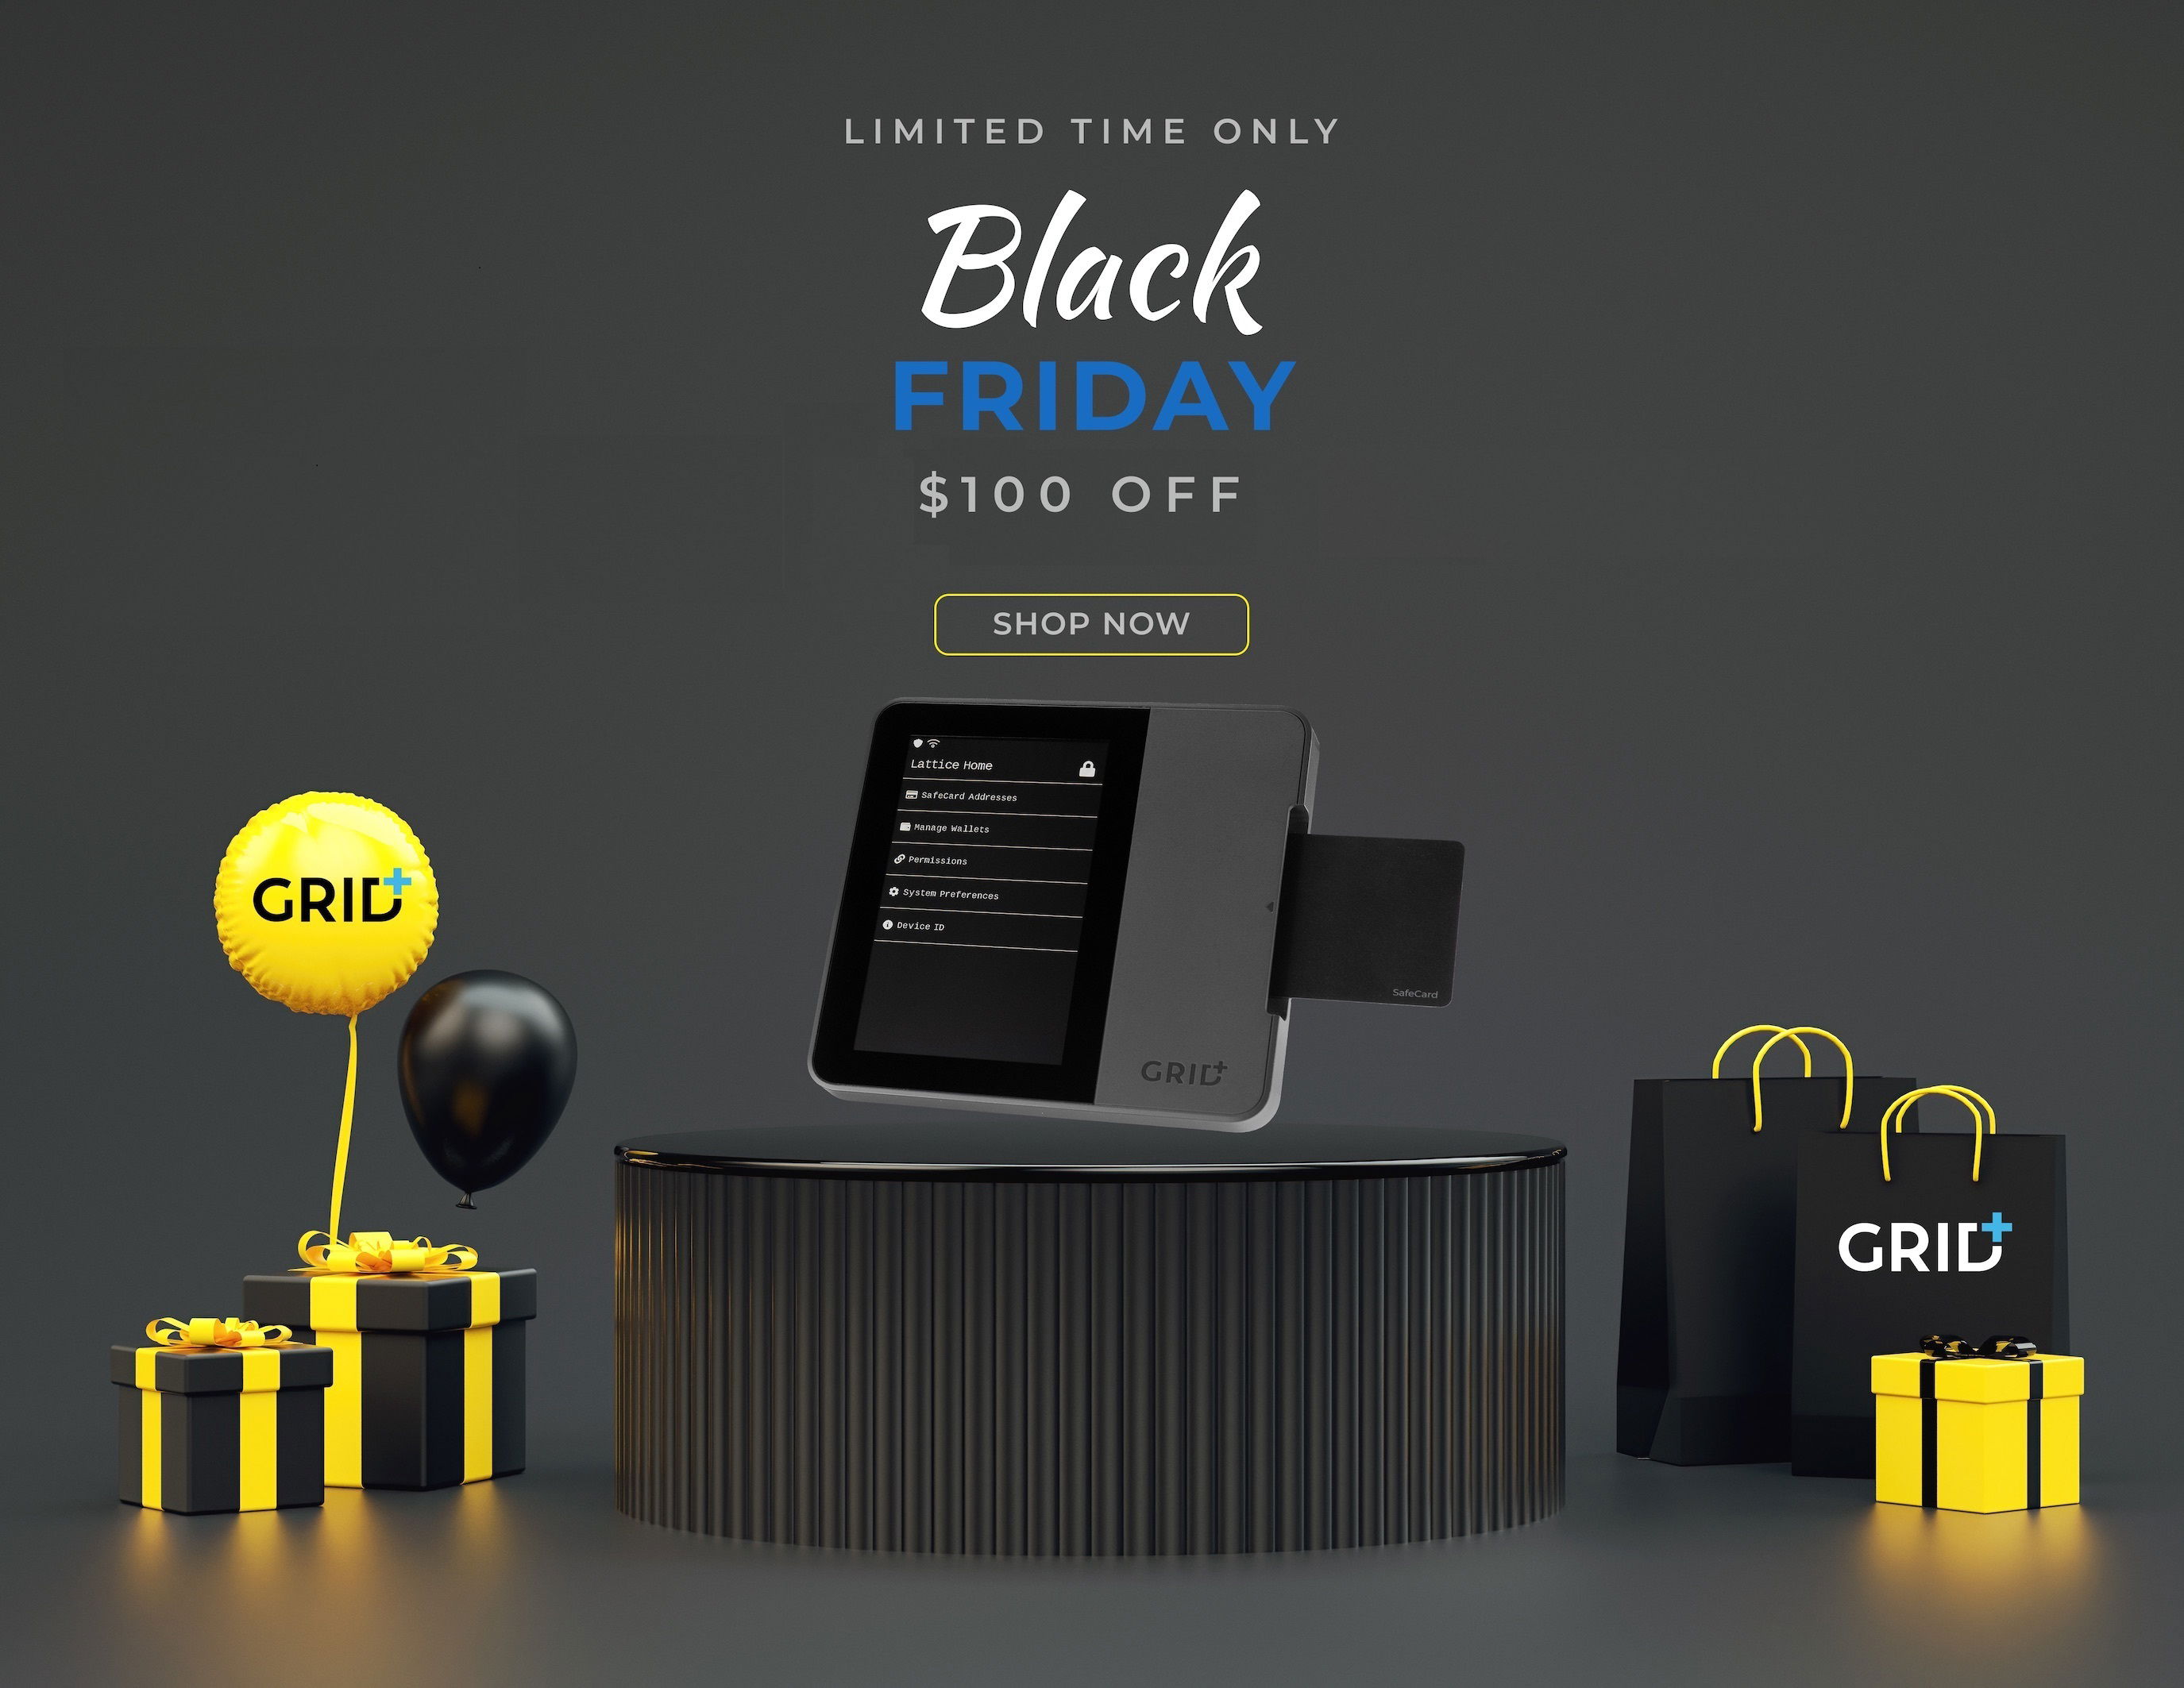 GridPlus Lattice 1 Hardware Wallet: Get $100 OFF